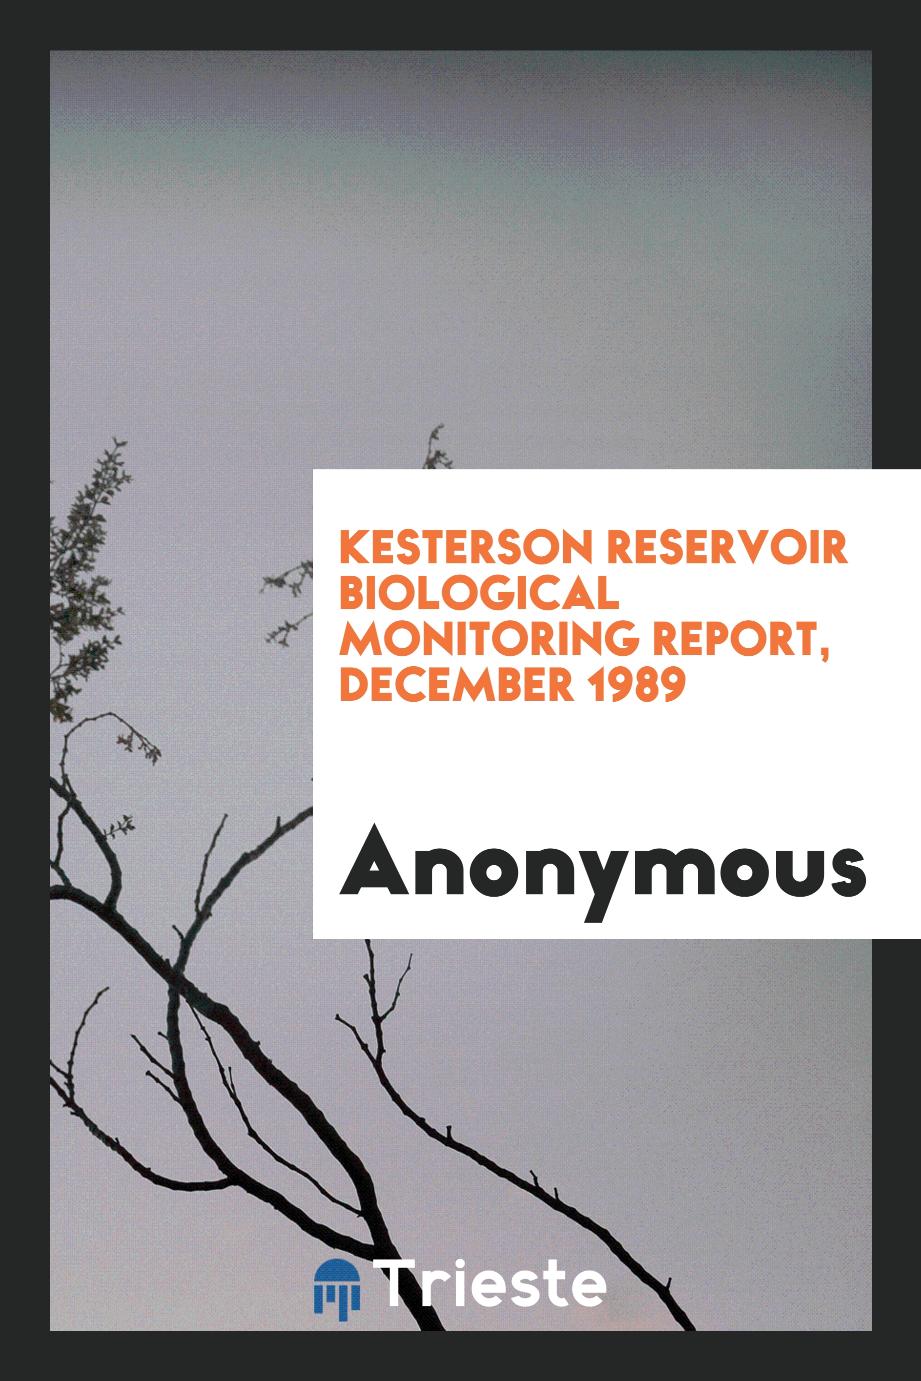 Kesterson Reservoir biological monitoring report, December 1989